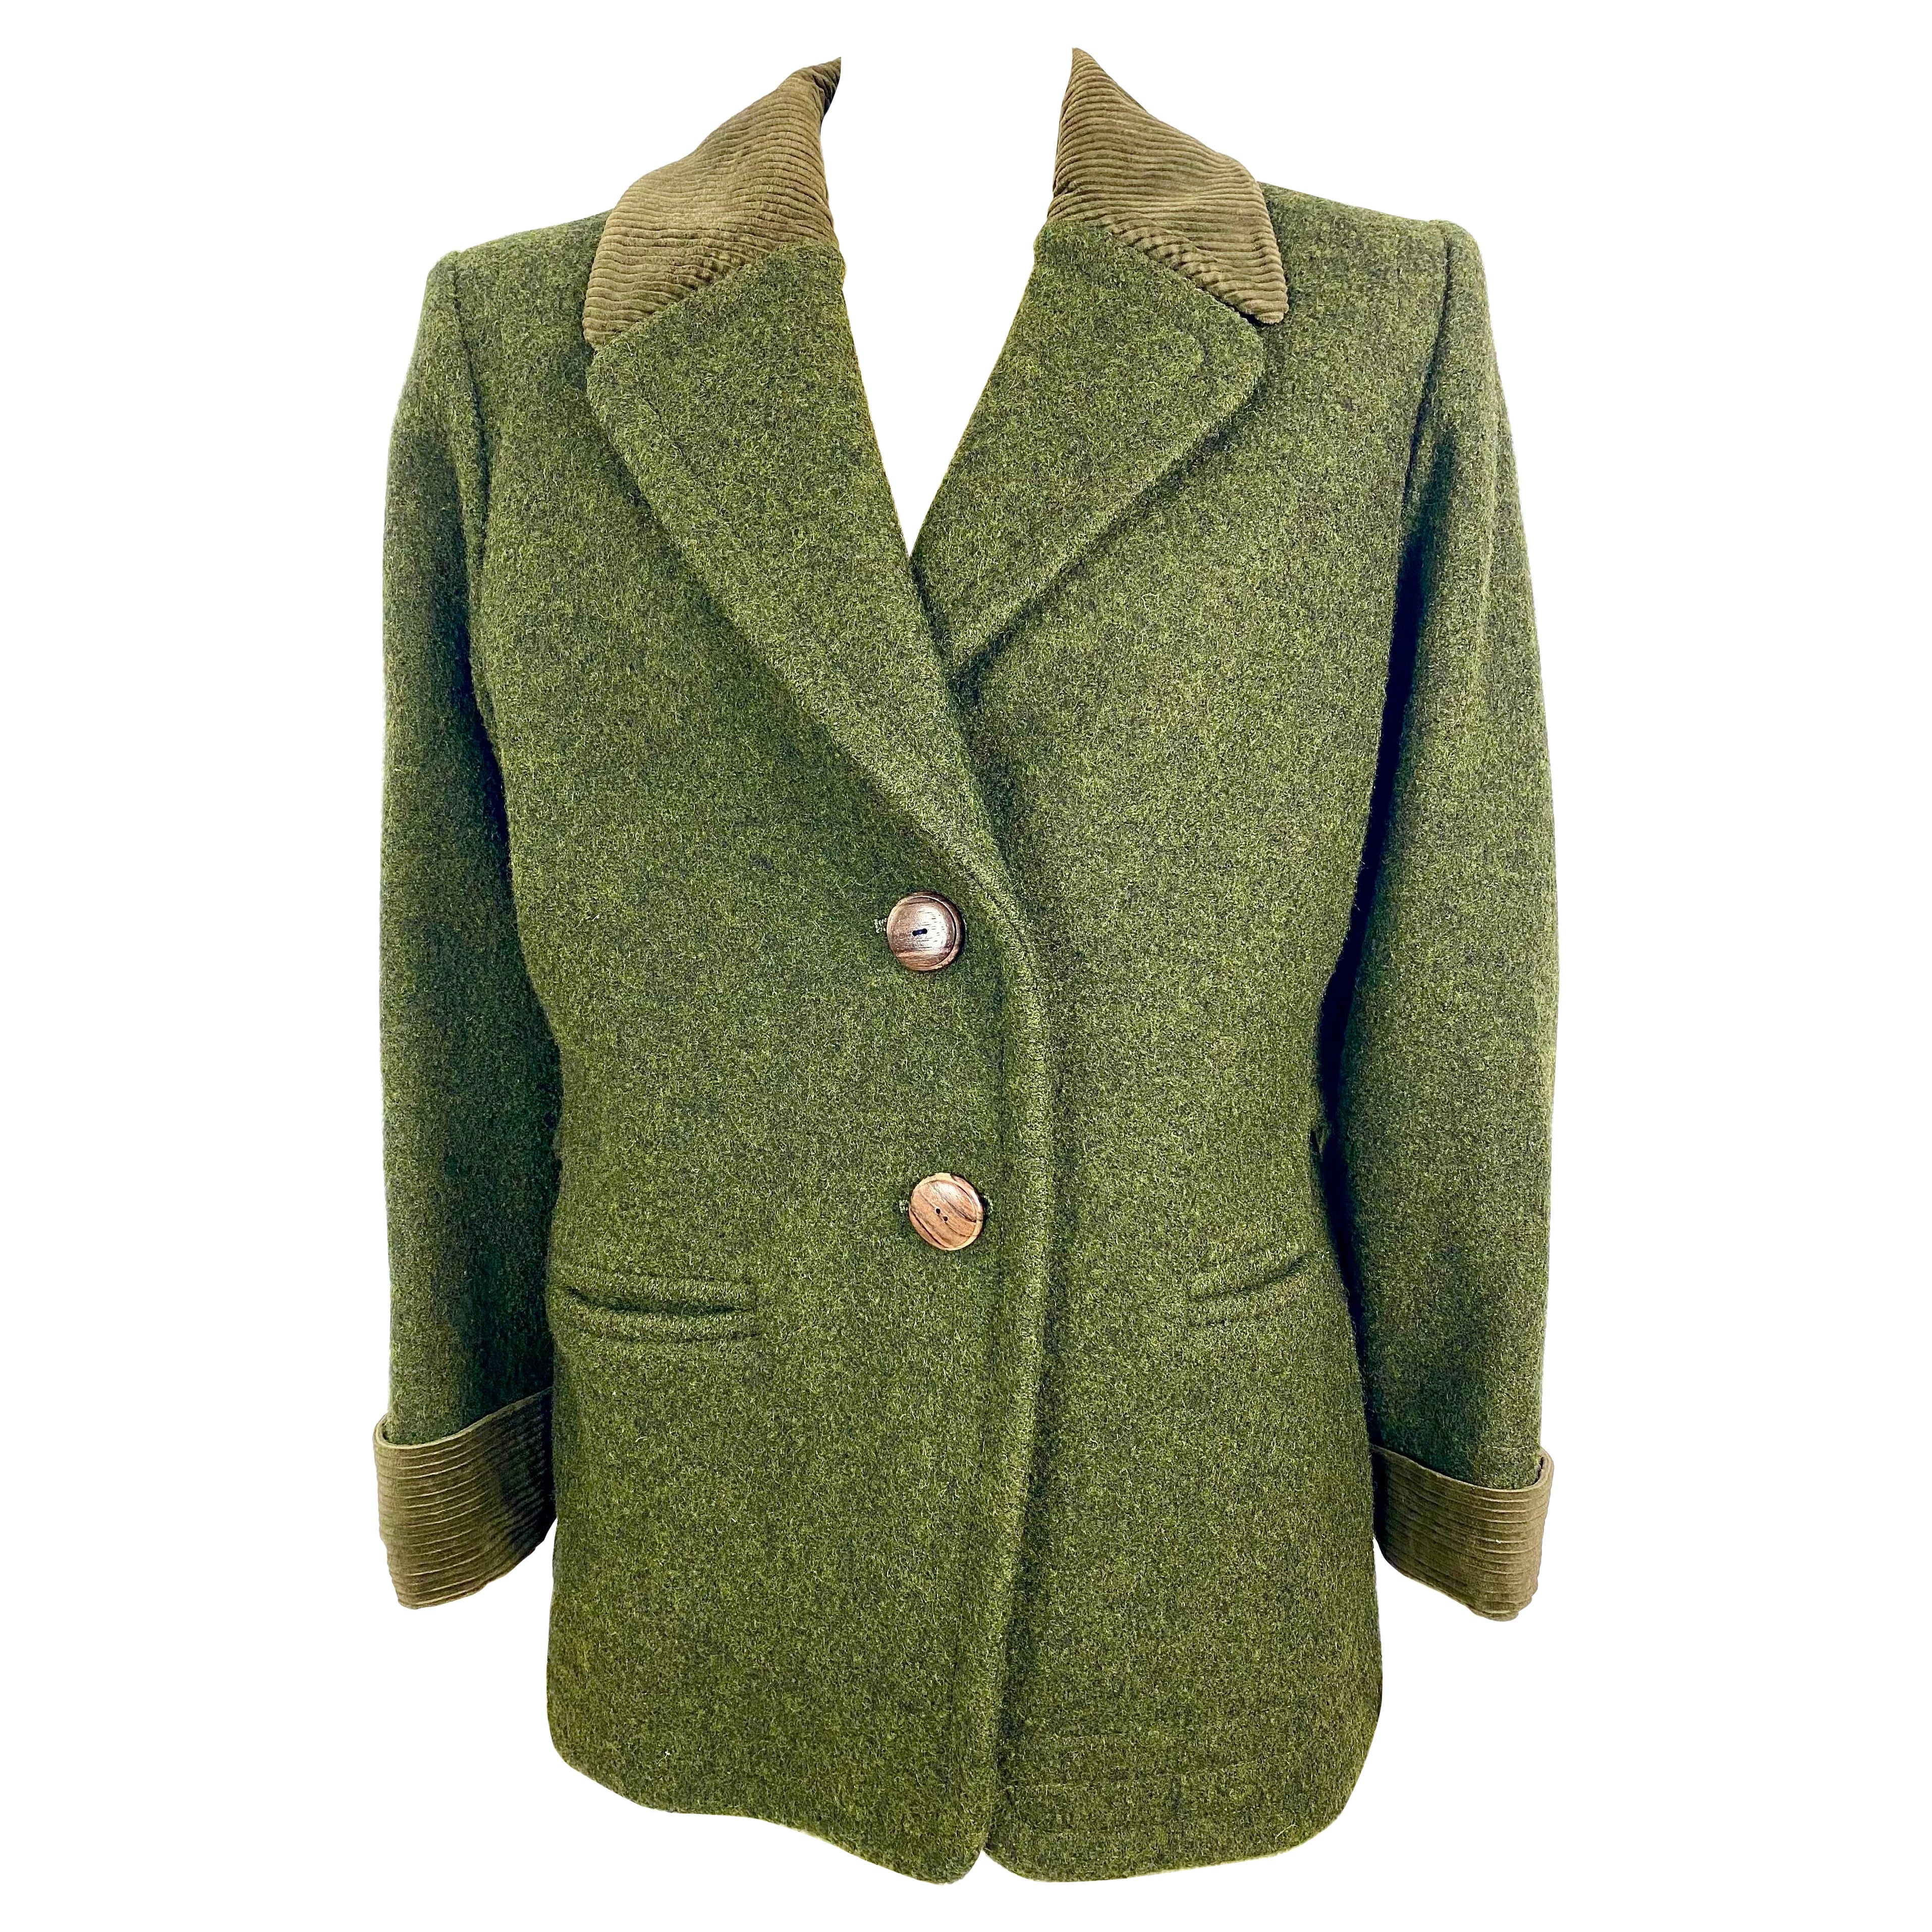 Superb vintage Yves saint laurent winter jacket circa 1970, in khaki boiled wool